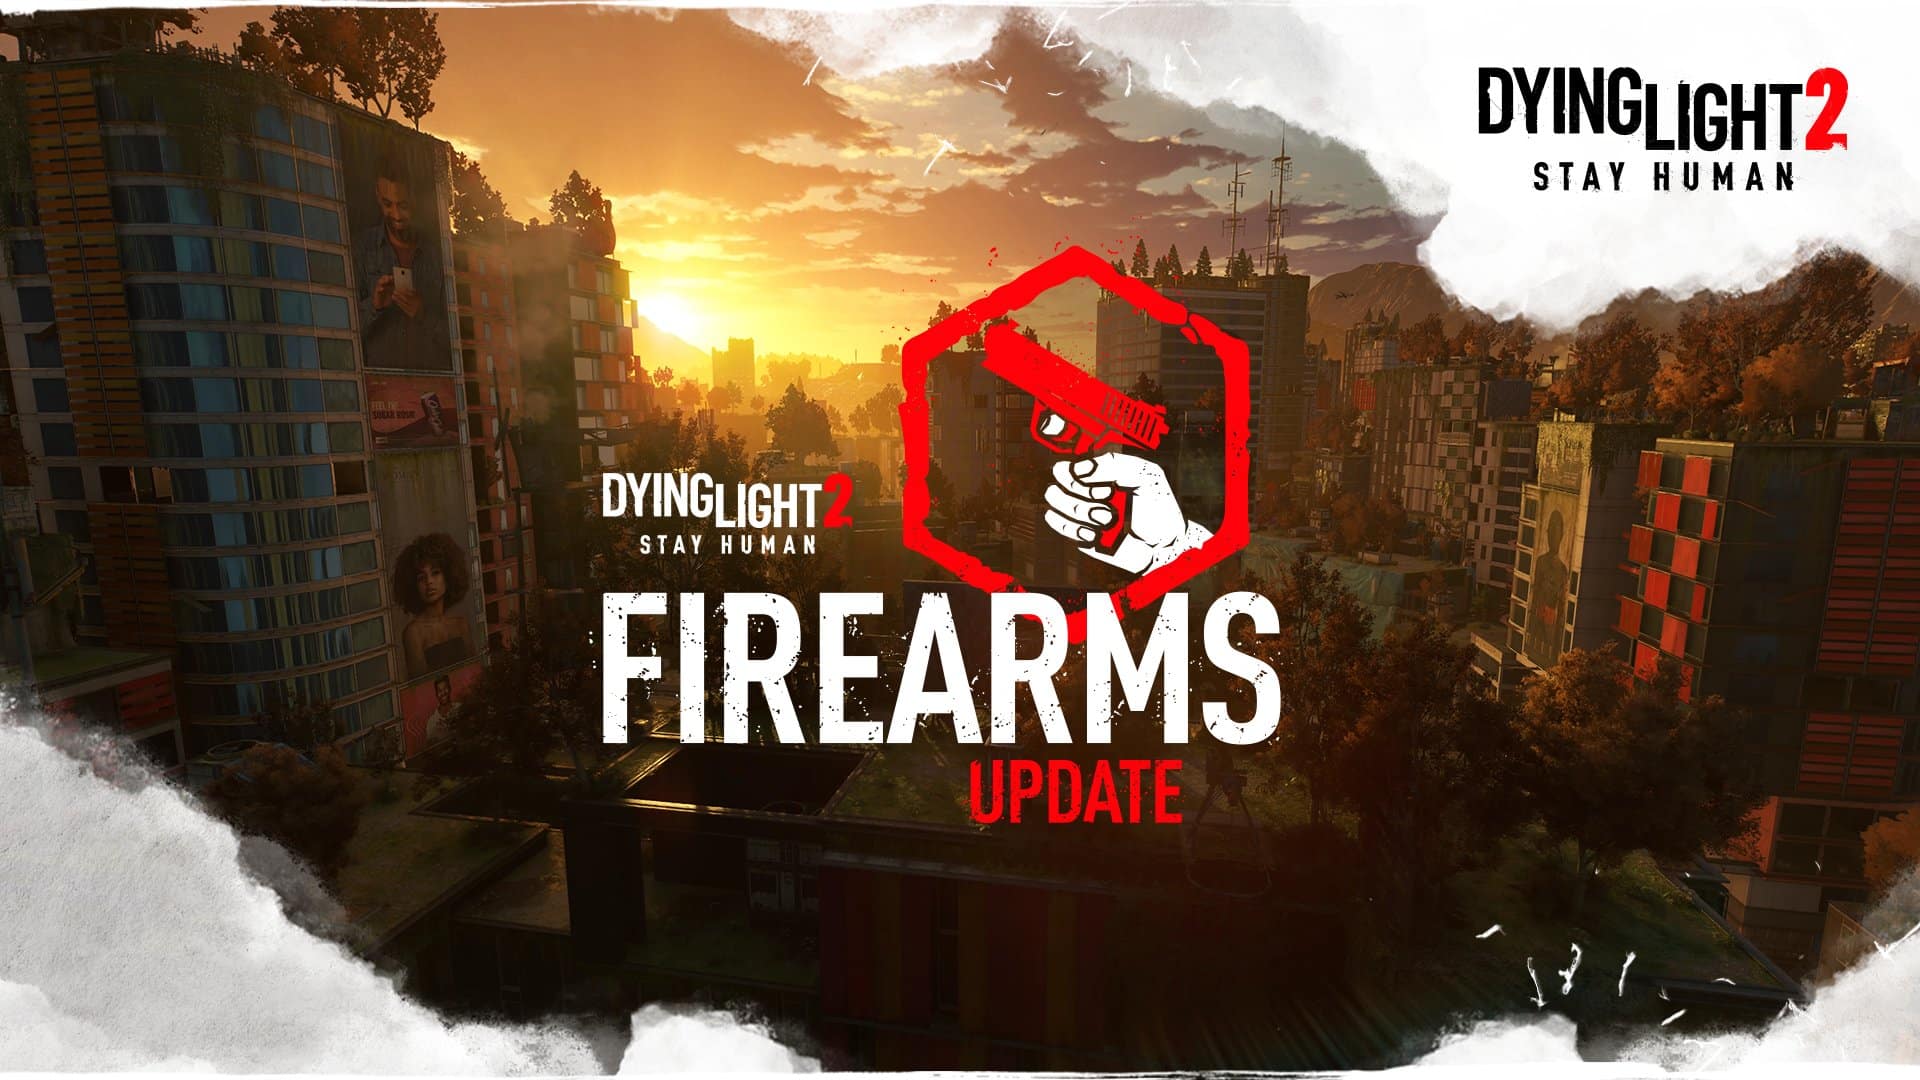 Dying Light 2 Update 1.44